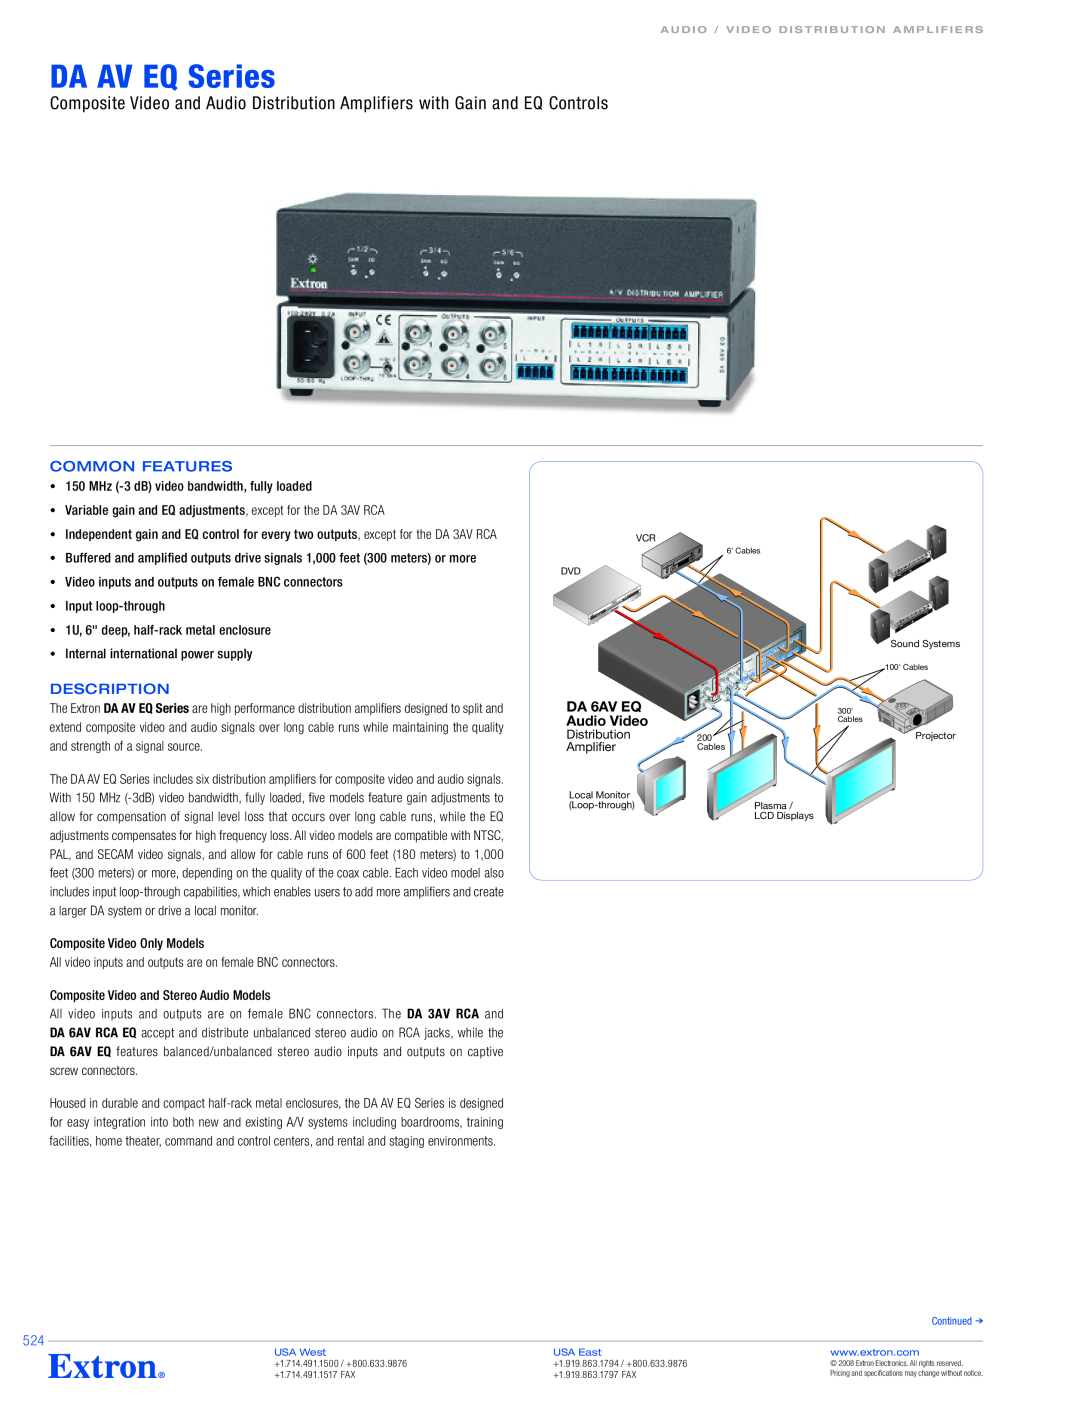 Extron electronic DA AV EQ Series specifications Common Features, Description, DA 6AV EQ, Audio Video 